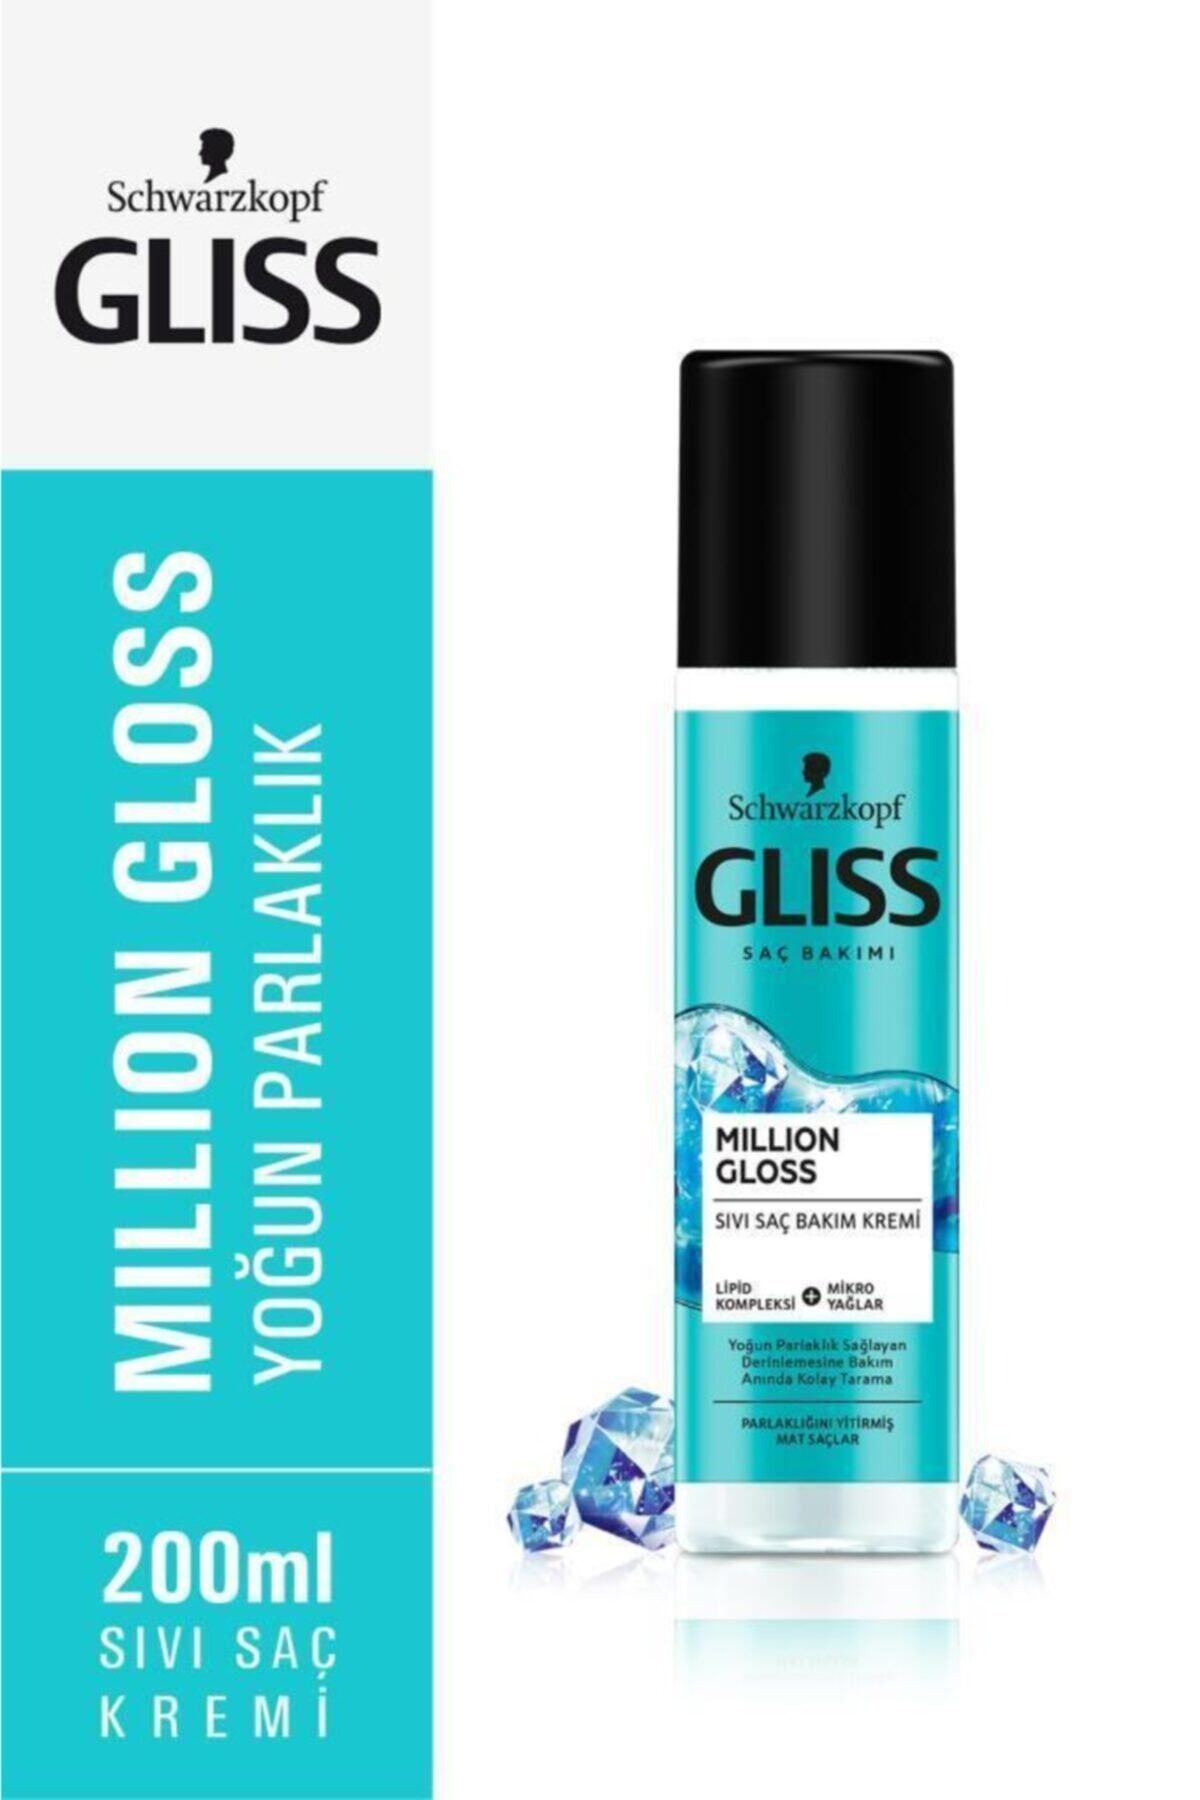 Gliss Schwarzkopf Gliss Million Gloss Yoğun Parlaklik Veren Durulanmayan Sivi Saç Kremi 200 Ml